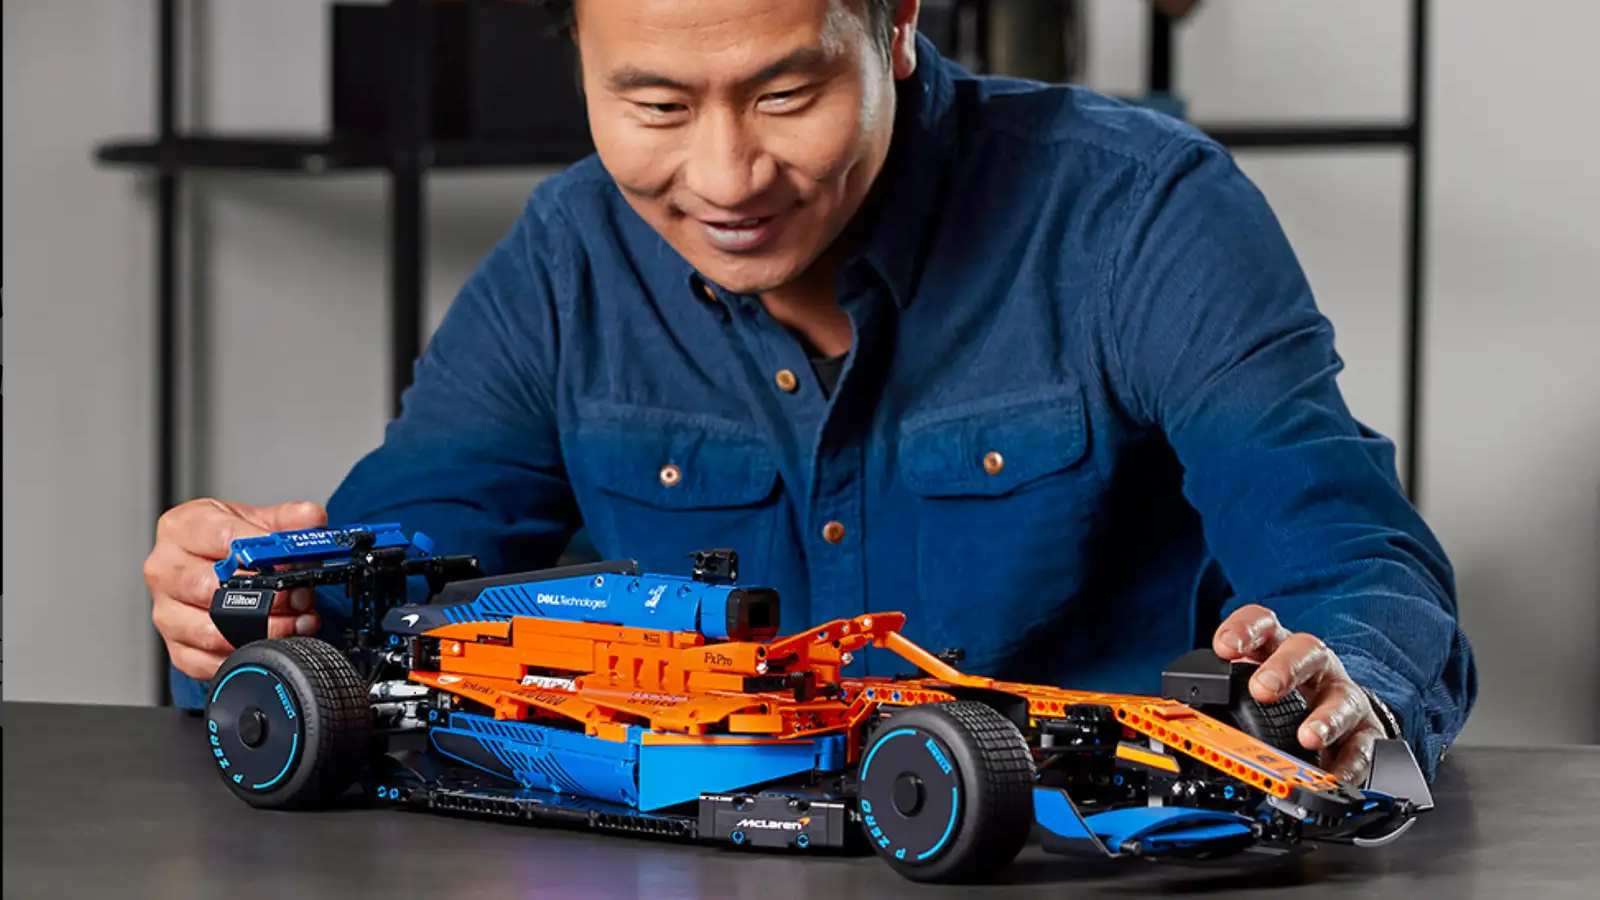 An adult admiring their LEGO Technic McLaren F1 race car.